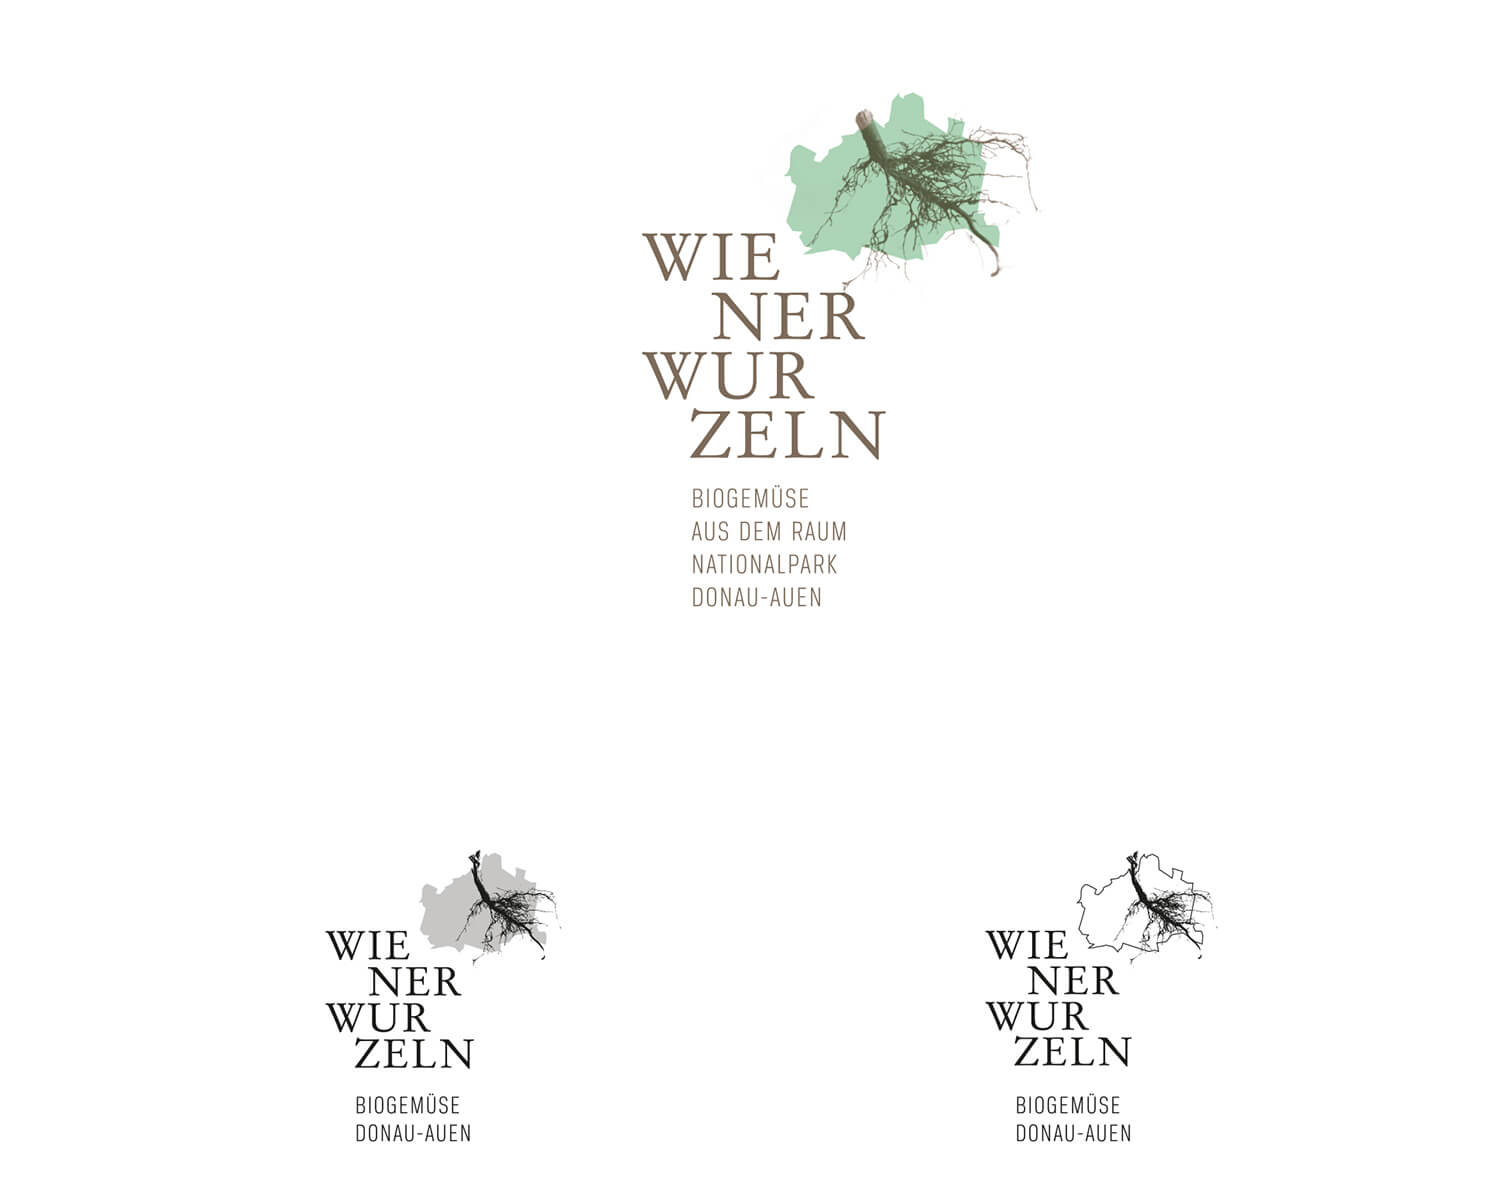 Wiener Wurzeln, Biogemüse, Donauauen, Wien, Corporate Design, Logo, Wortbildmarke, Werbung, Branding